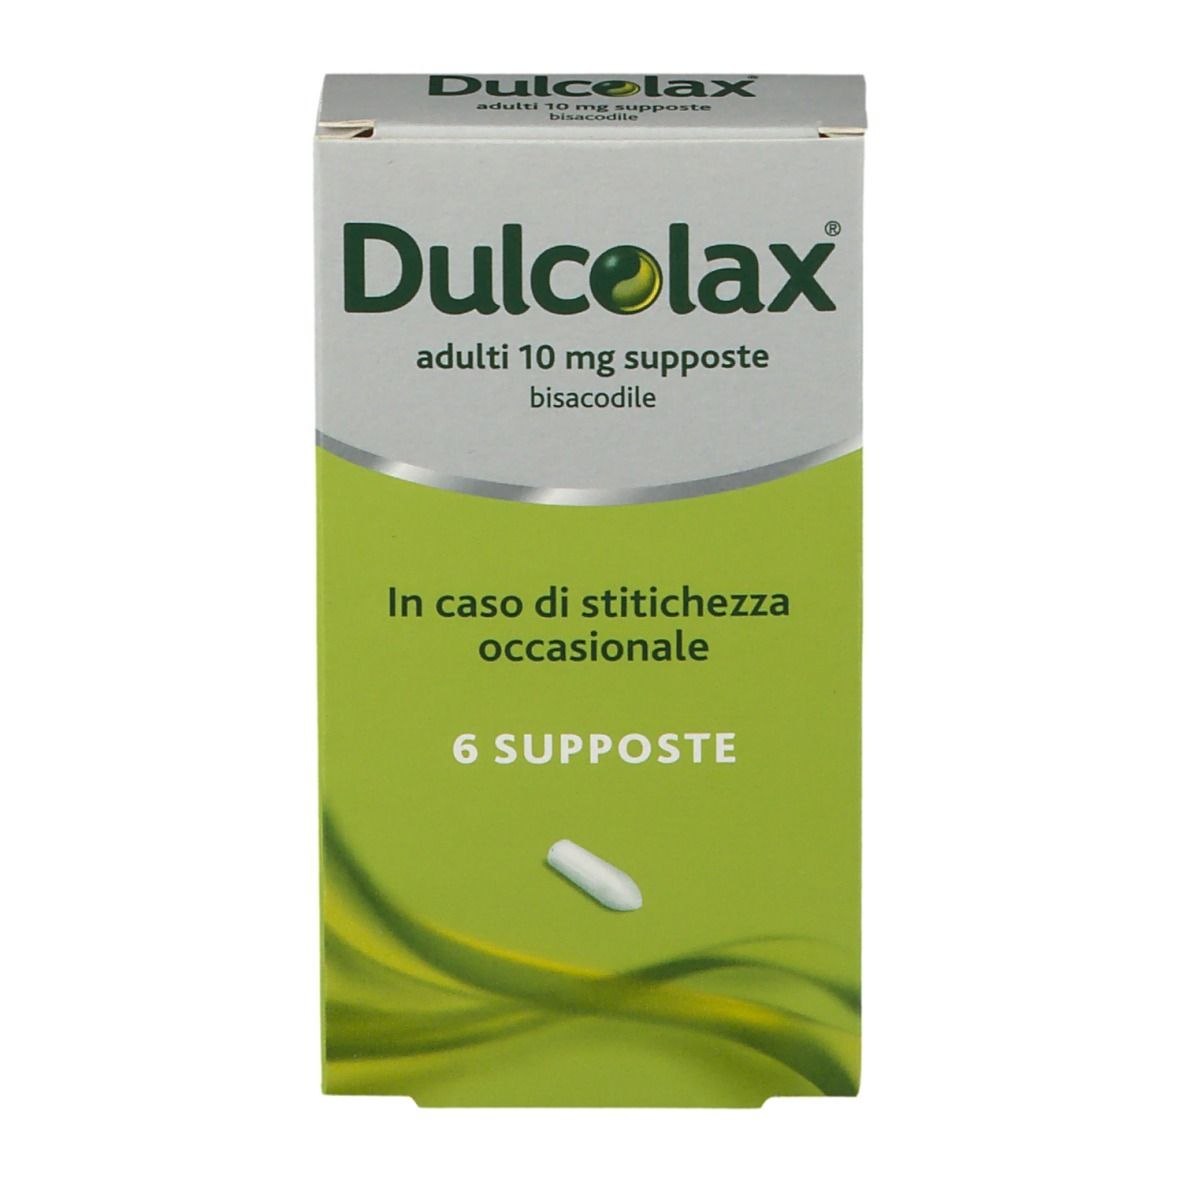 Dulcolax® Supposte adulti